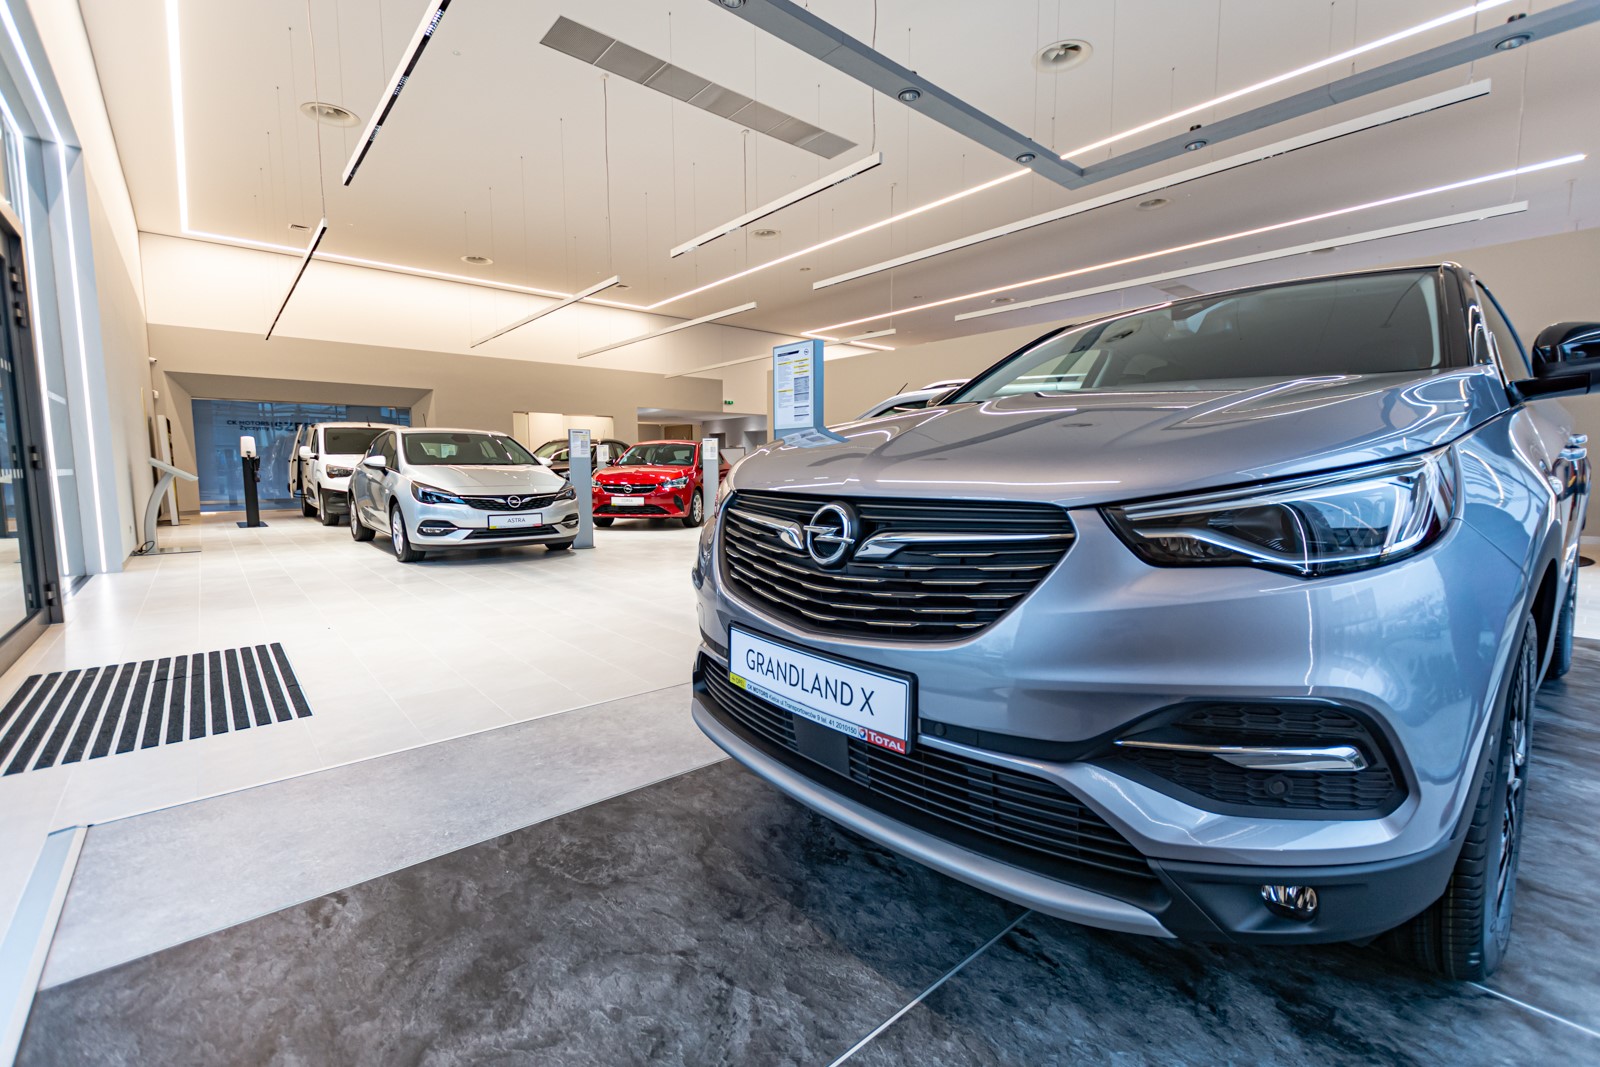 Nowy salon marek Peugeot i Opel w Kielcach Francuskie.pl